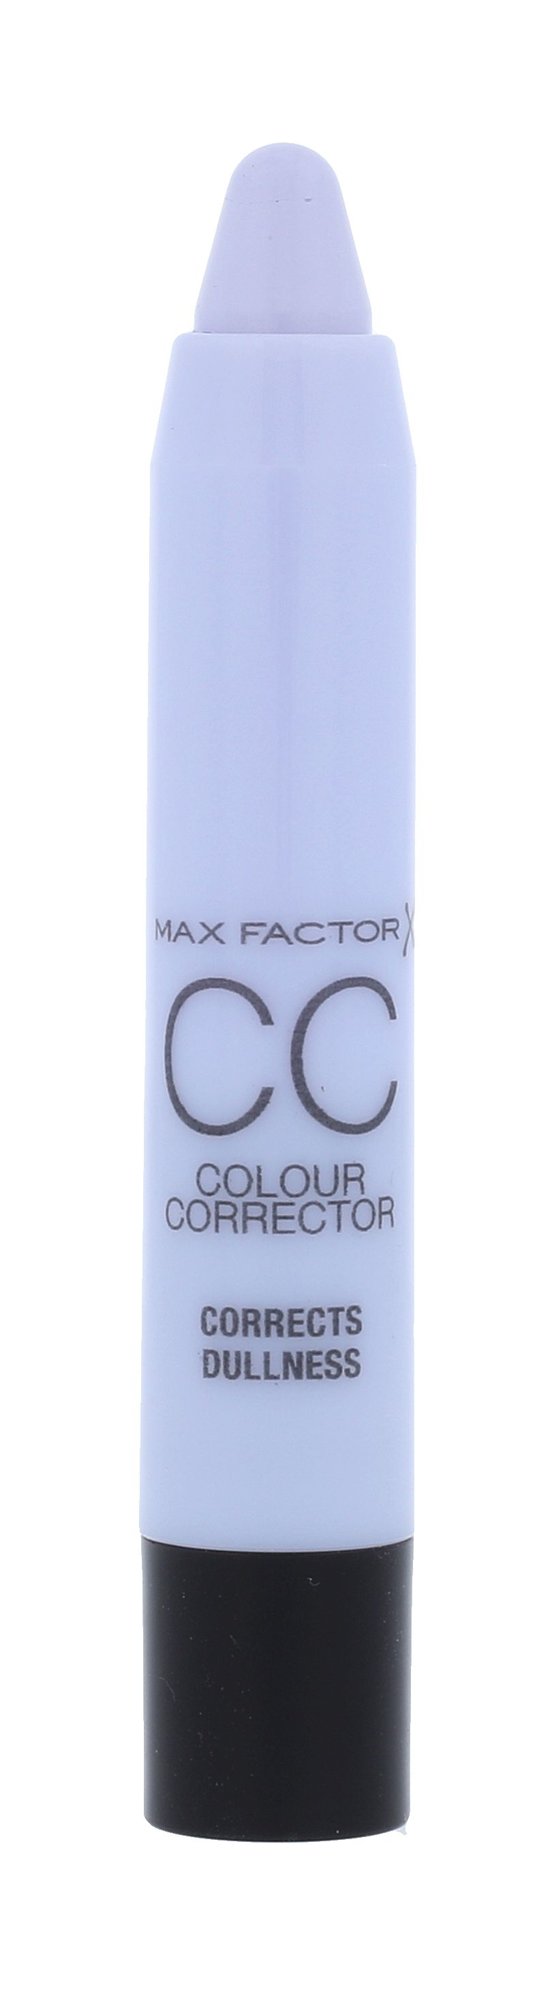 Max Factor CC Colour Corrector 3,3g korektorius